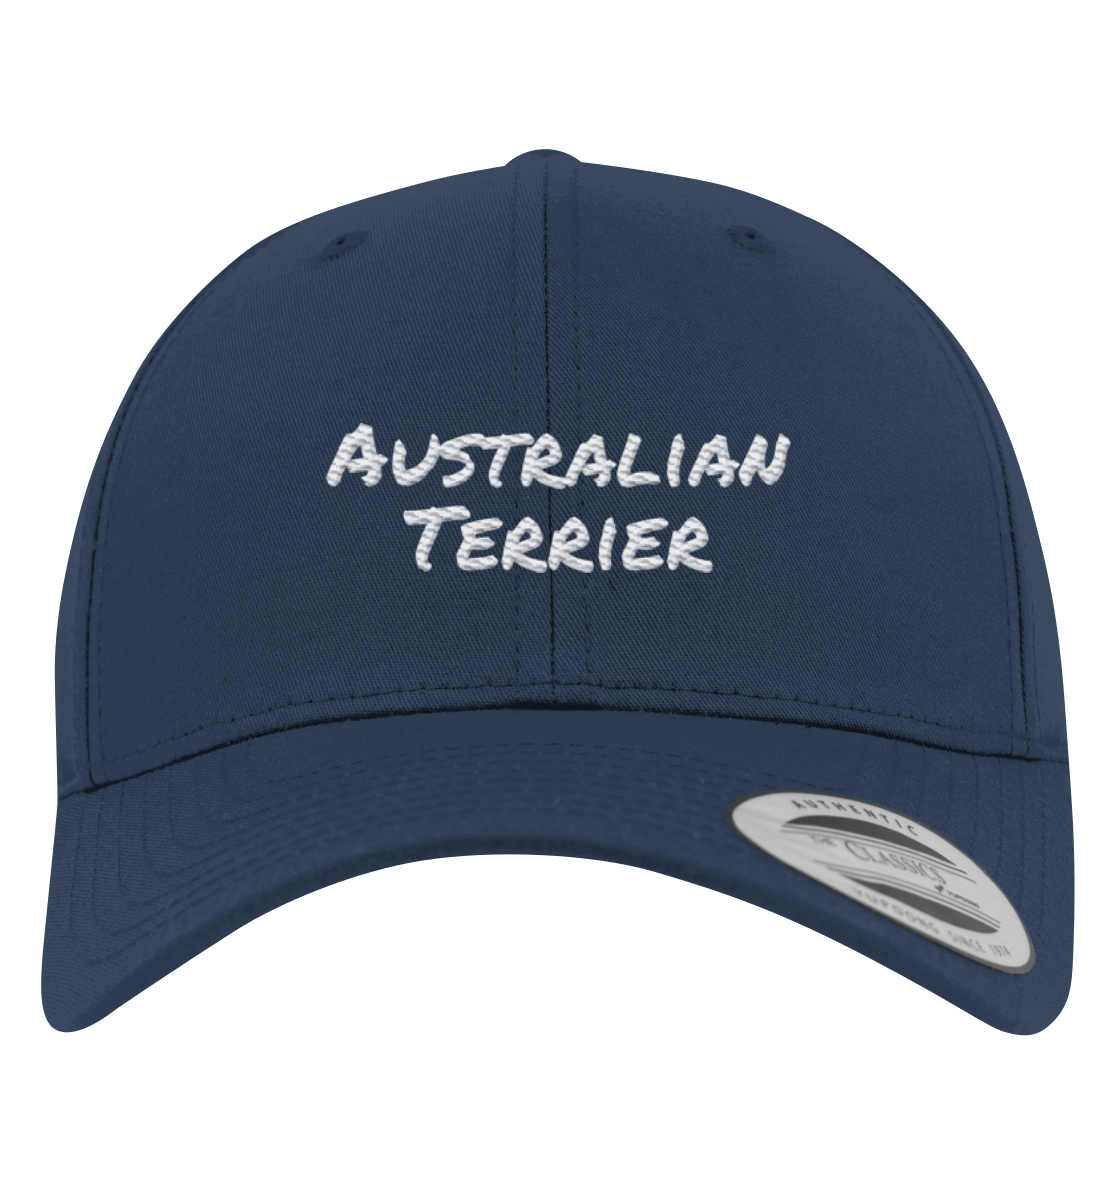 Australian Terrier - Premium Baseball Cap